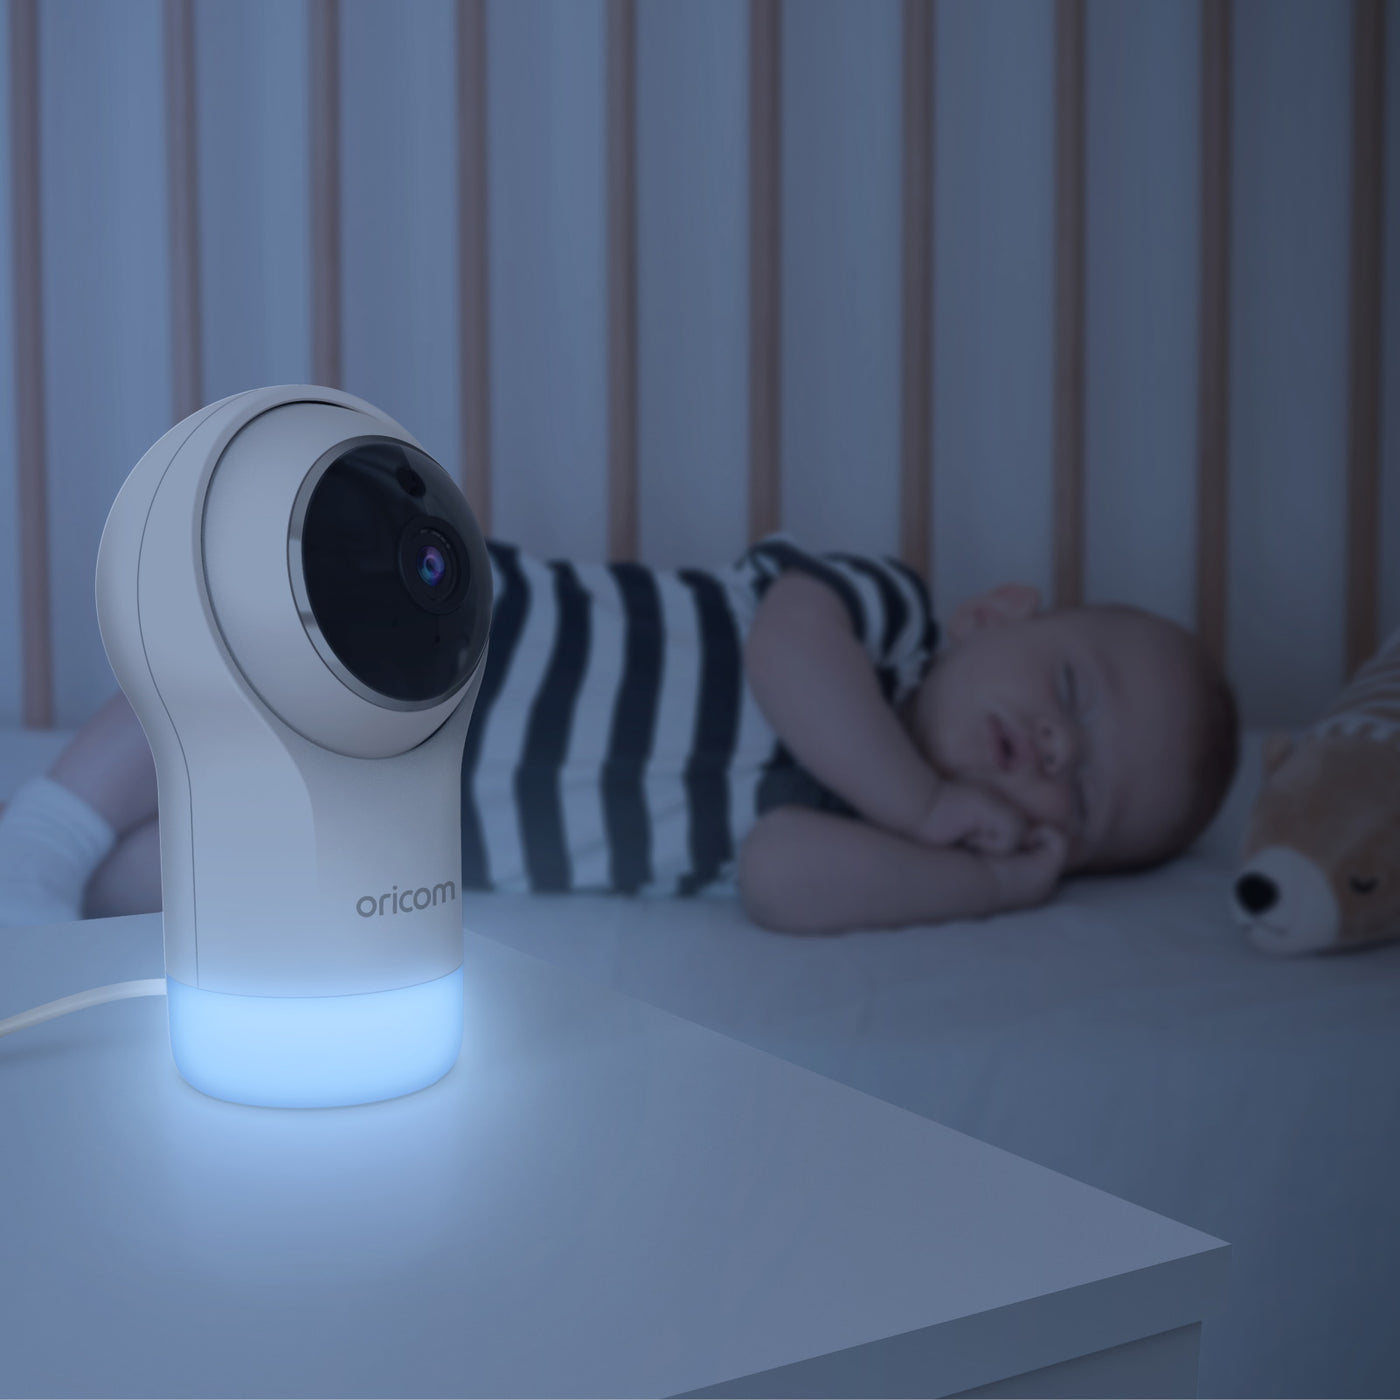 5" Smart HD Nursery Pal Glow + Baby Monitor